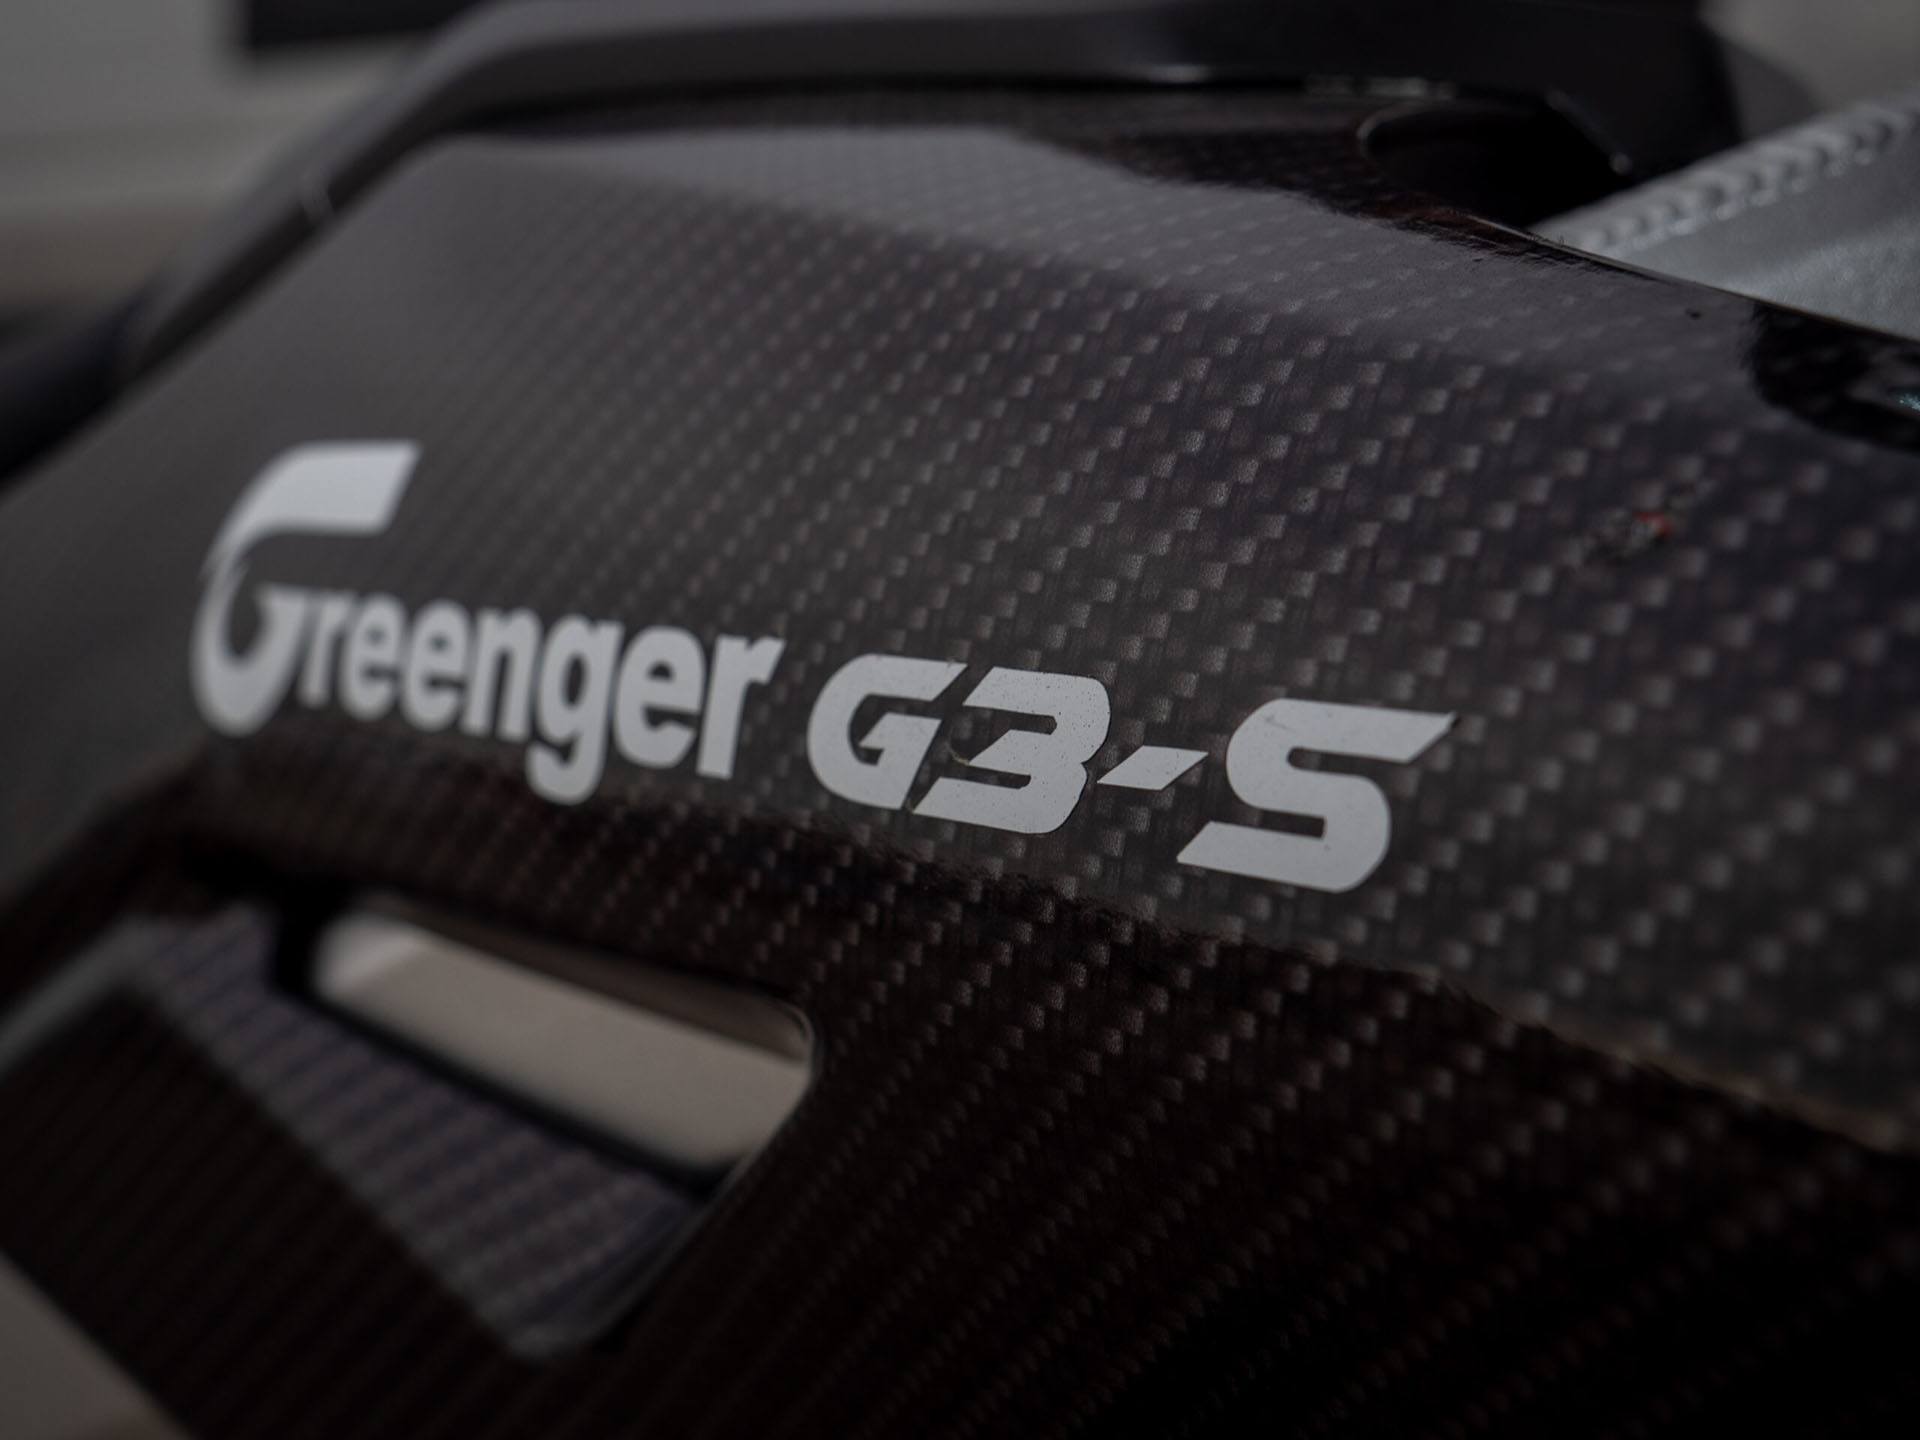 2023 Greenger Powersports G3S in Scottsdale, Arizona - Photo 11